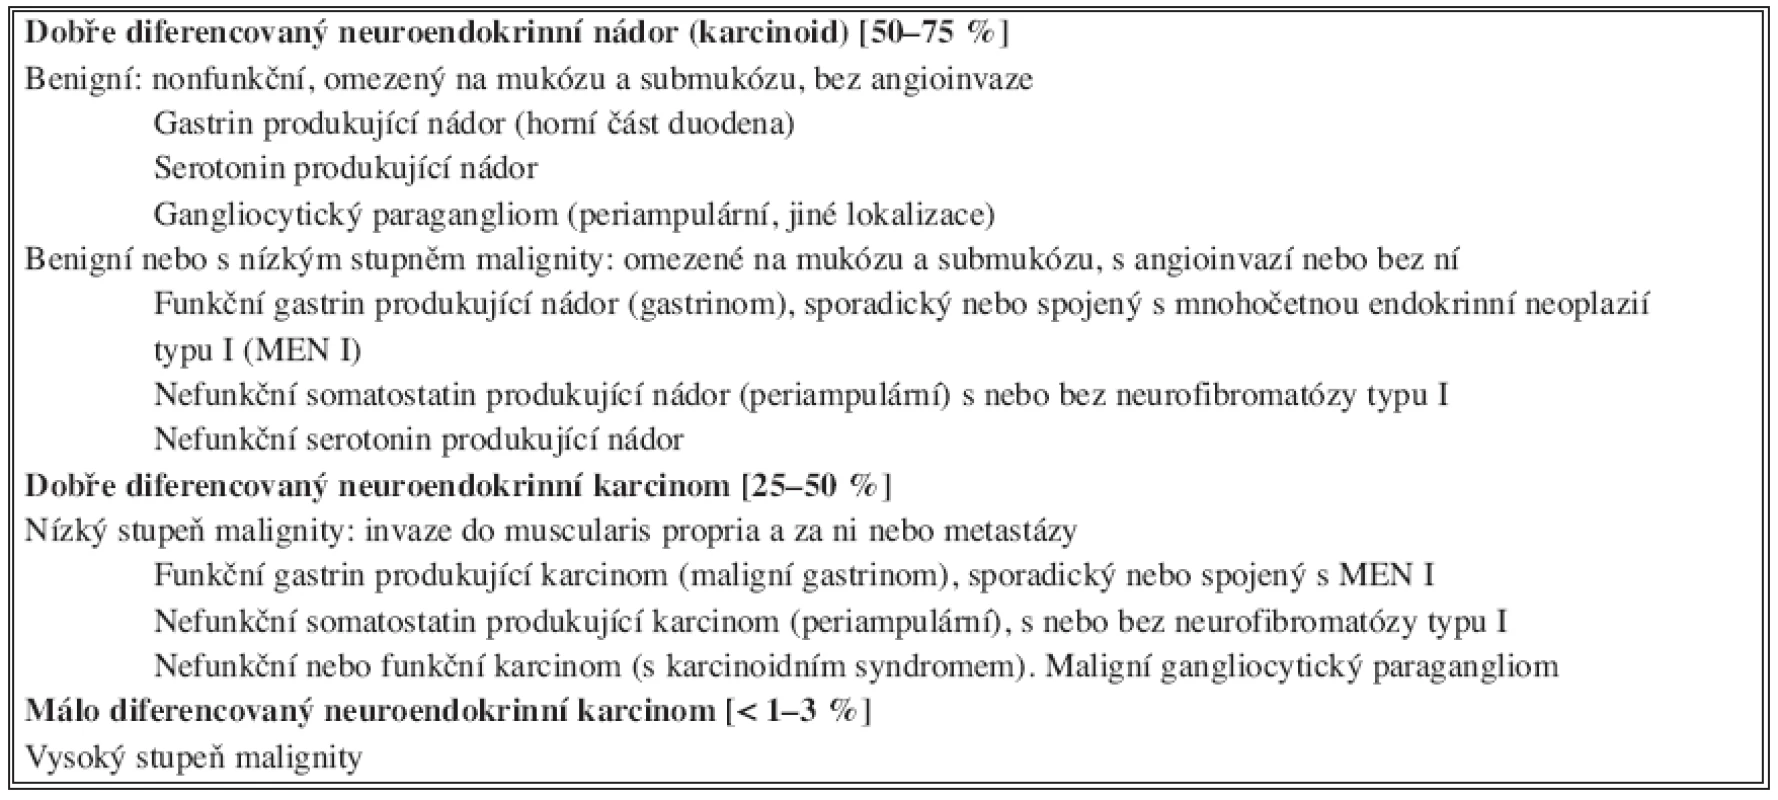 Klasifikace neuroendokrinních nádorů duodena a horního jejuna 
Tab. 2. Classification of neuroendocrine duodenal and proximal jejunal tumors 
